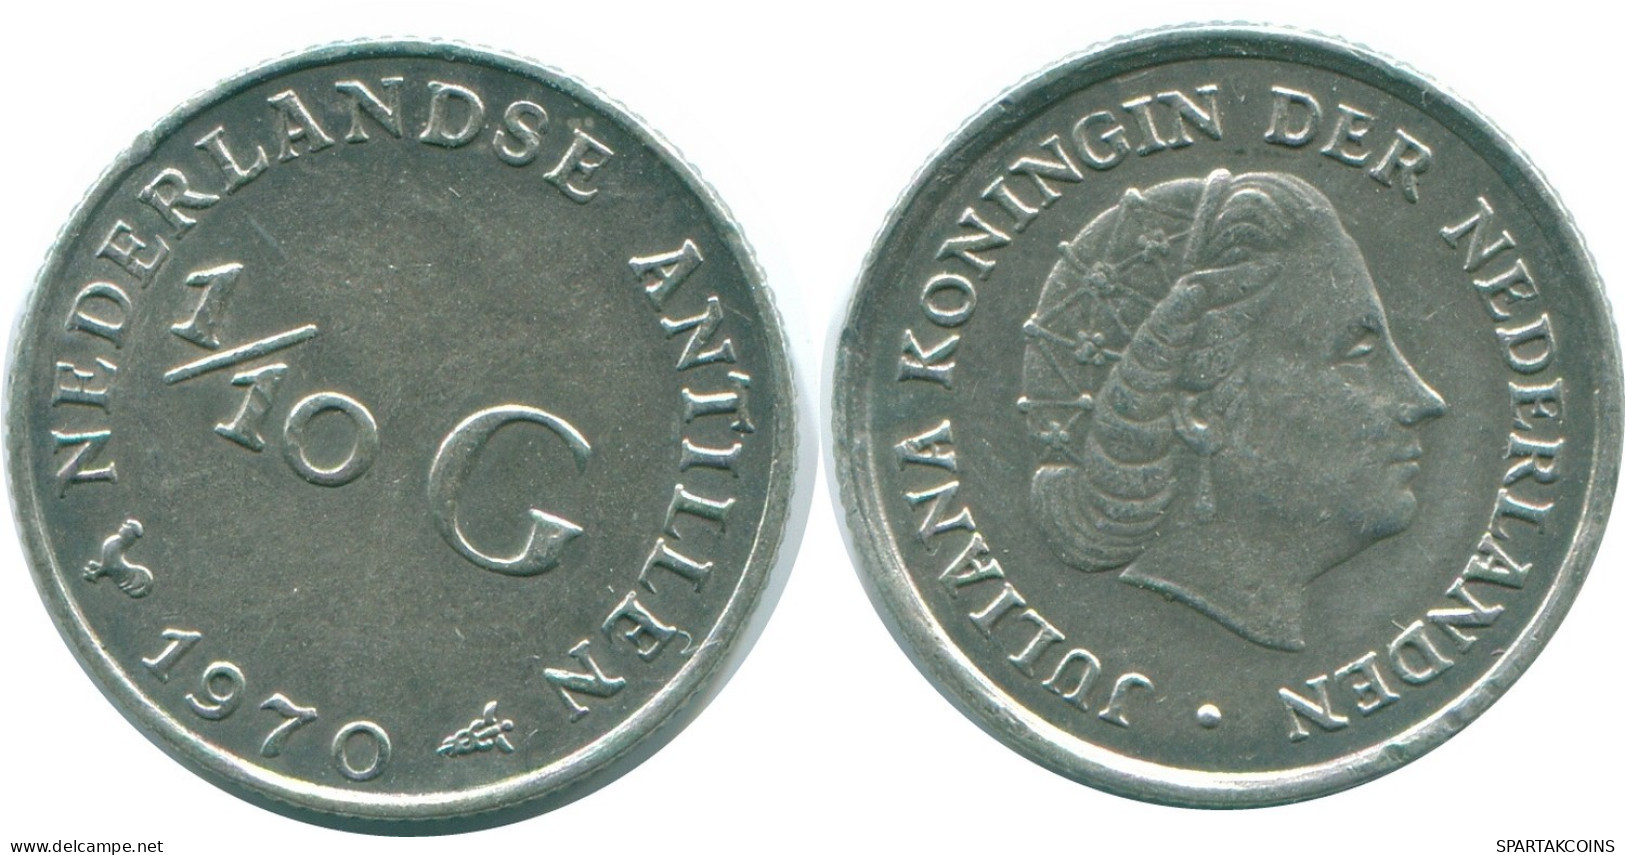 1/10 GULDEN 1970 NETHERLANDS ANTILLES SILVER Colonial Coin #NL12981.3.U.A - Netherlands Antilles